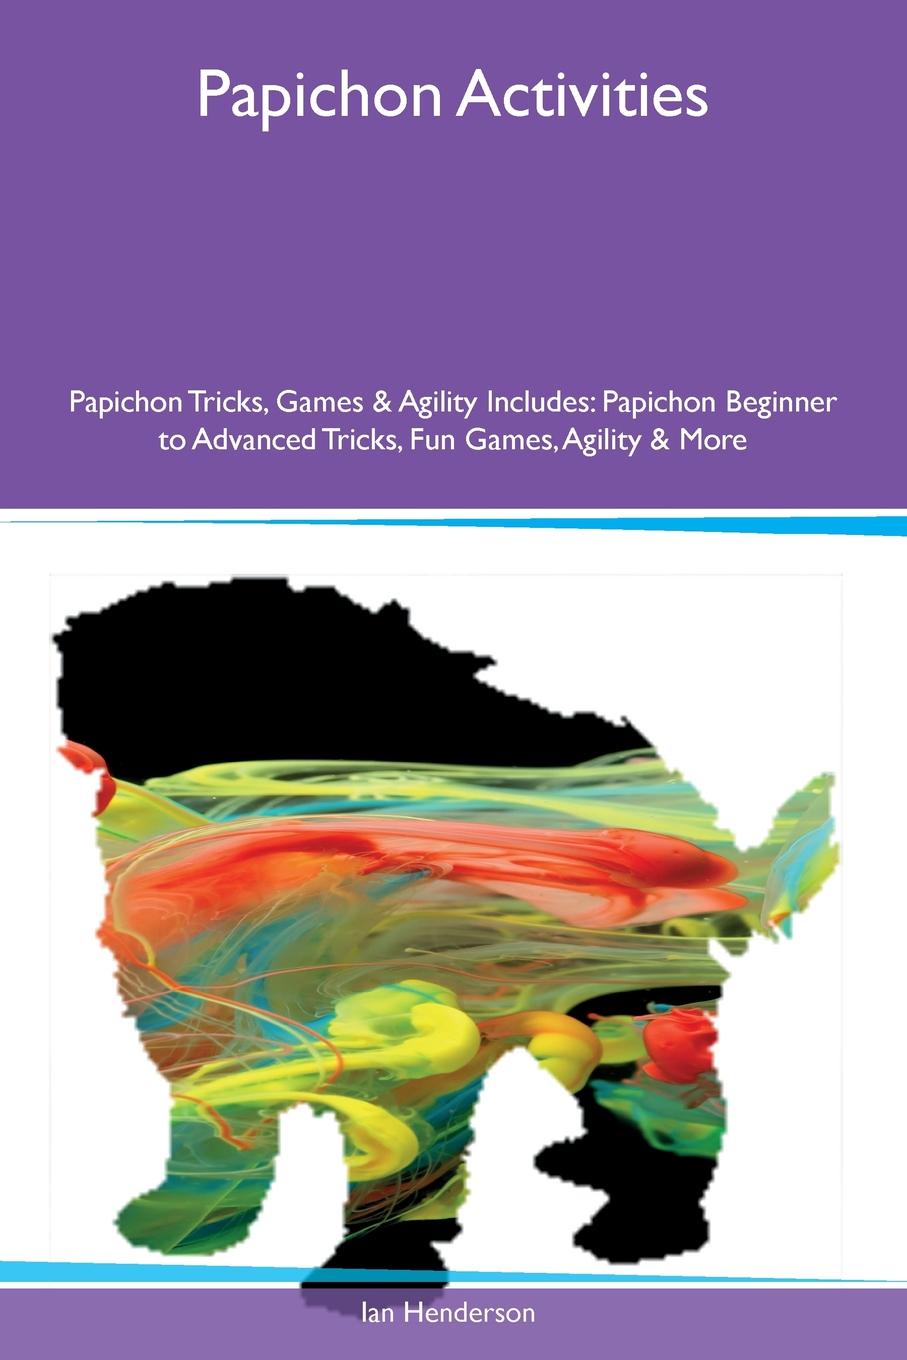 Papichon Activities Papichon Tricks, Games & Agility Includes. Papichon Beginner to Advanced Tricks, Fun Games, Agility & More